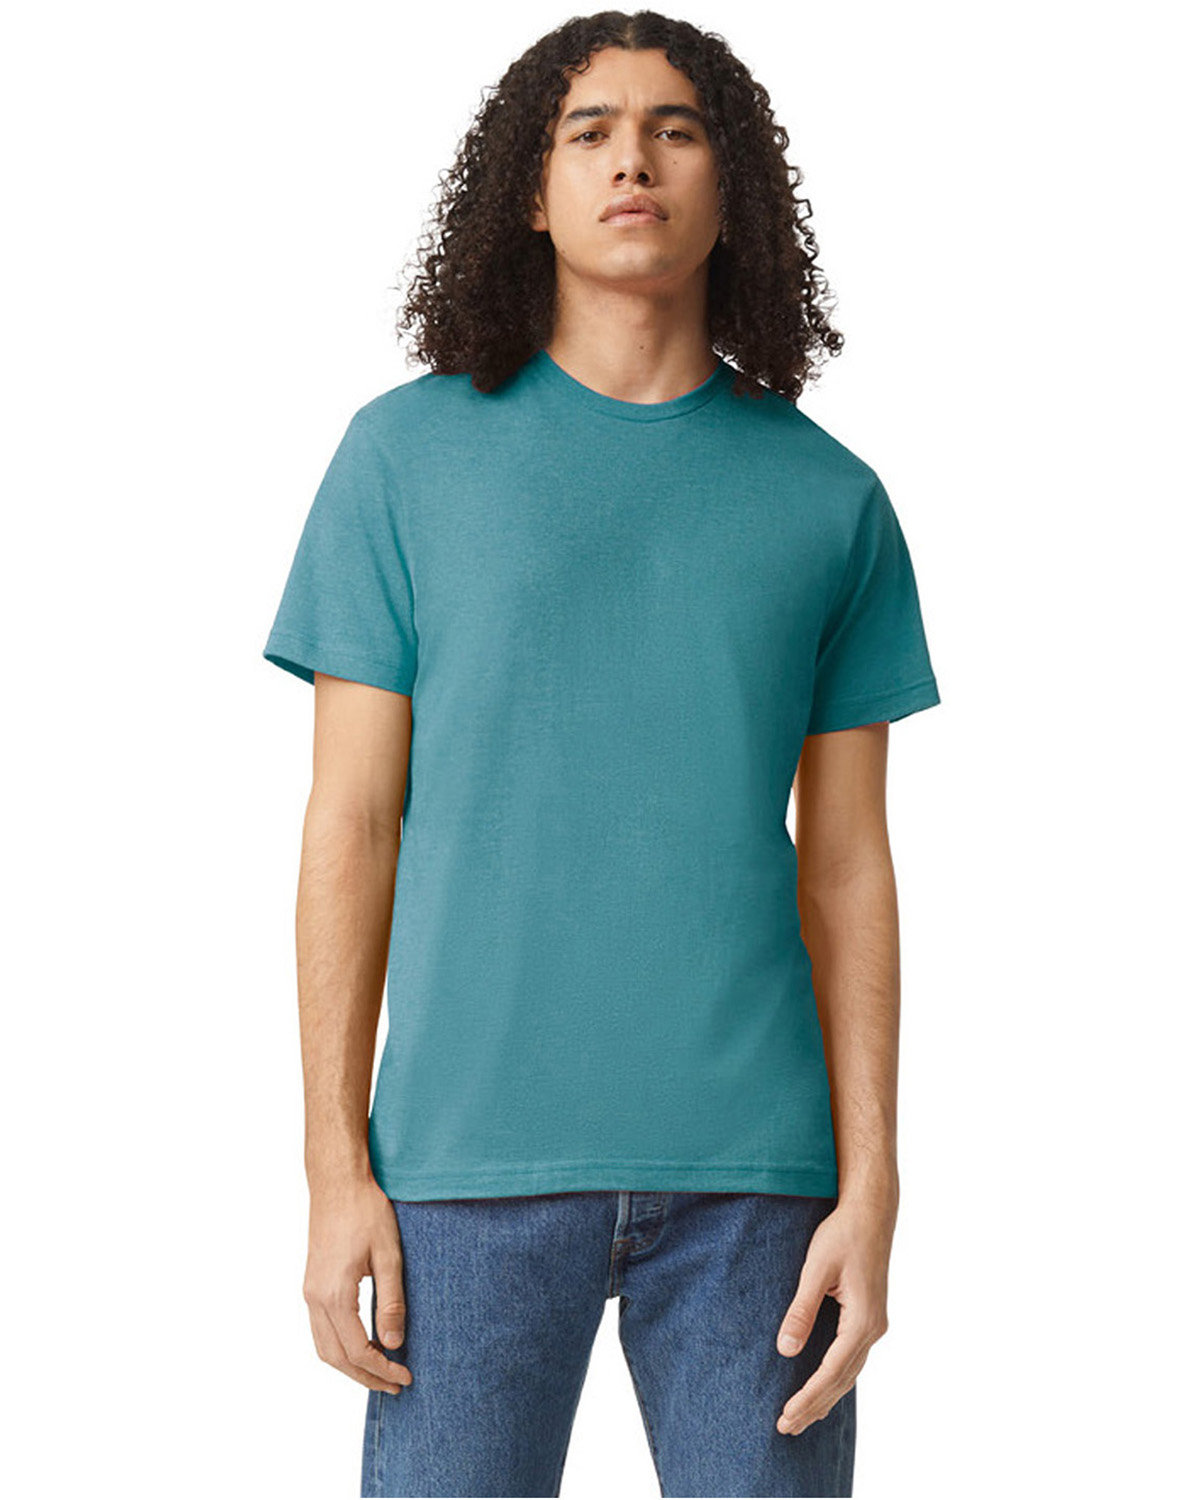 American Apparel Unisex CVC T-Shirt HEATHER ARCTIC 